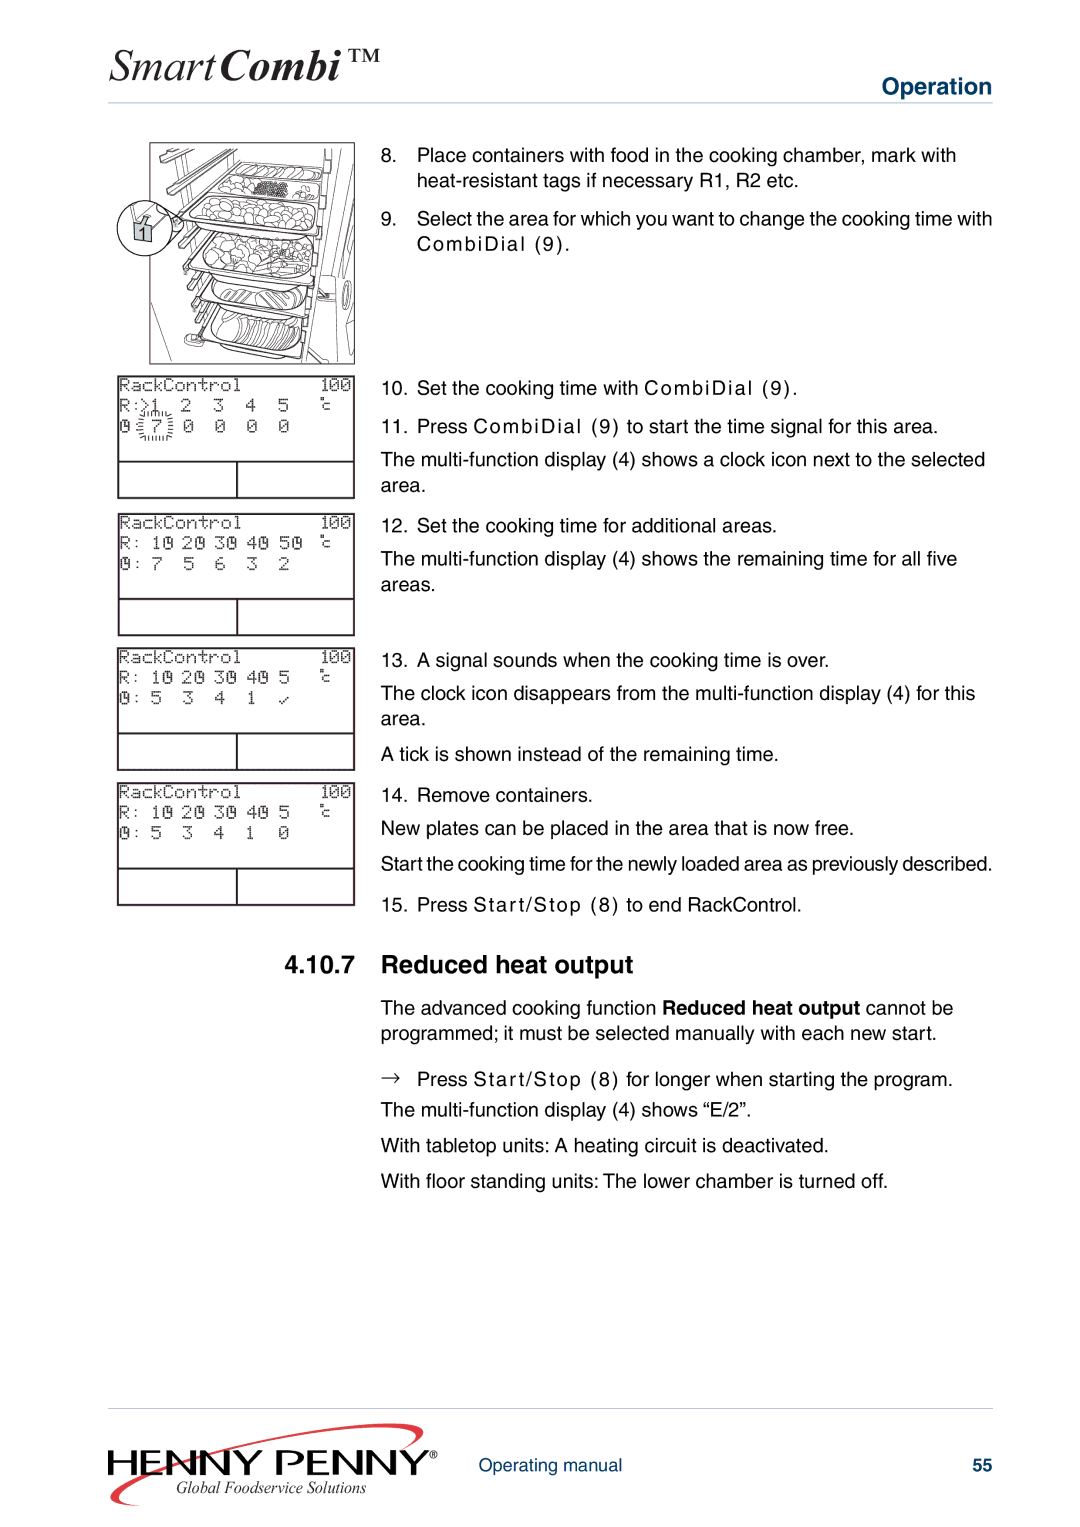 Henny Penny FM05-061-A manual 10.7 